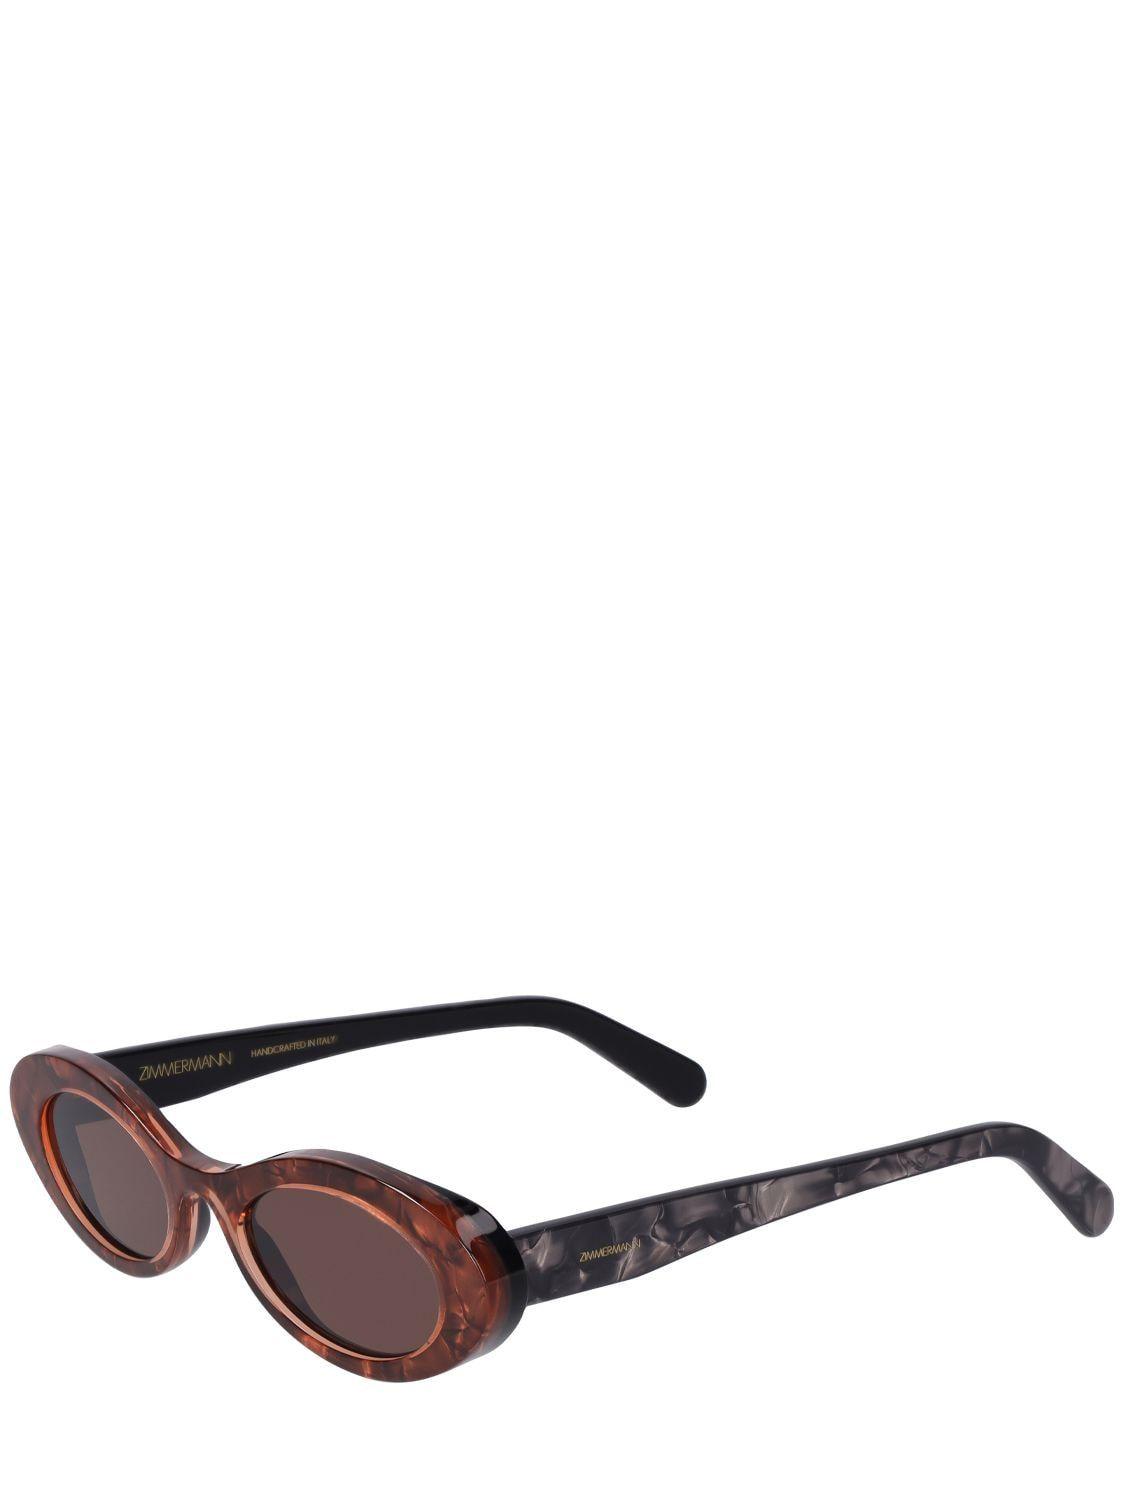 Zimmermann Prima Ellipse Oval Acetate Sunglasses in Brown | Lyst